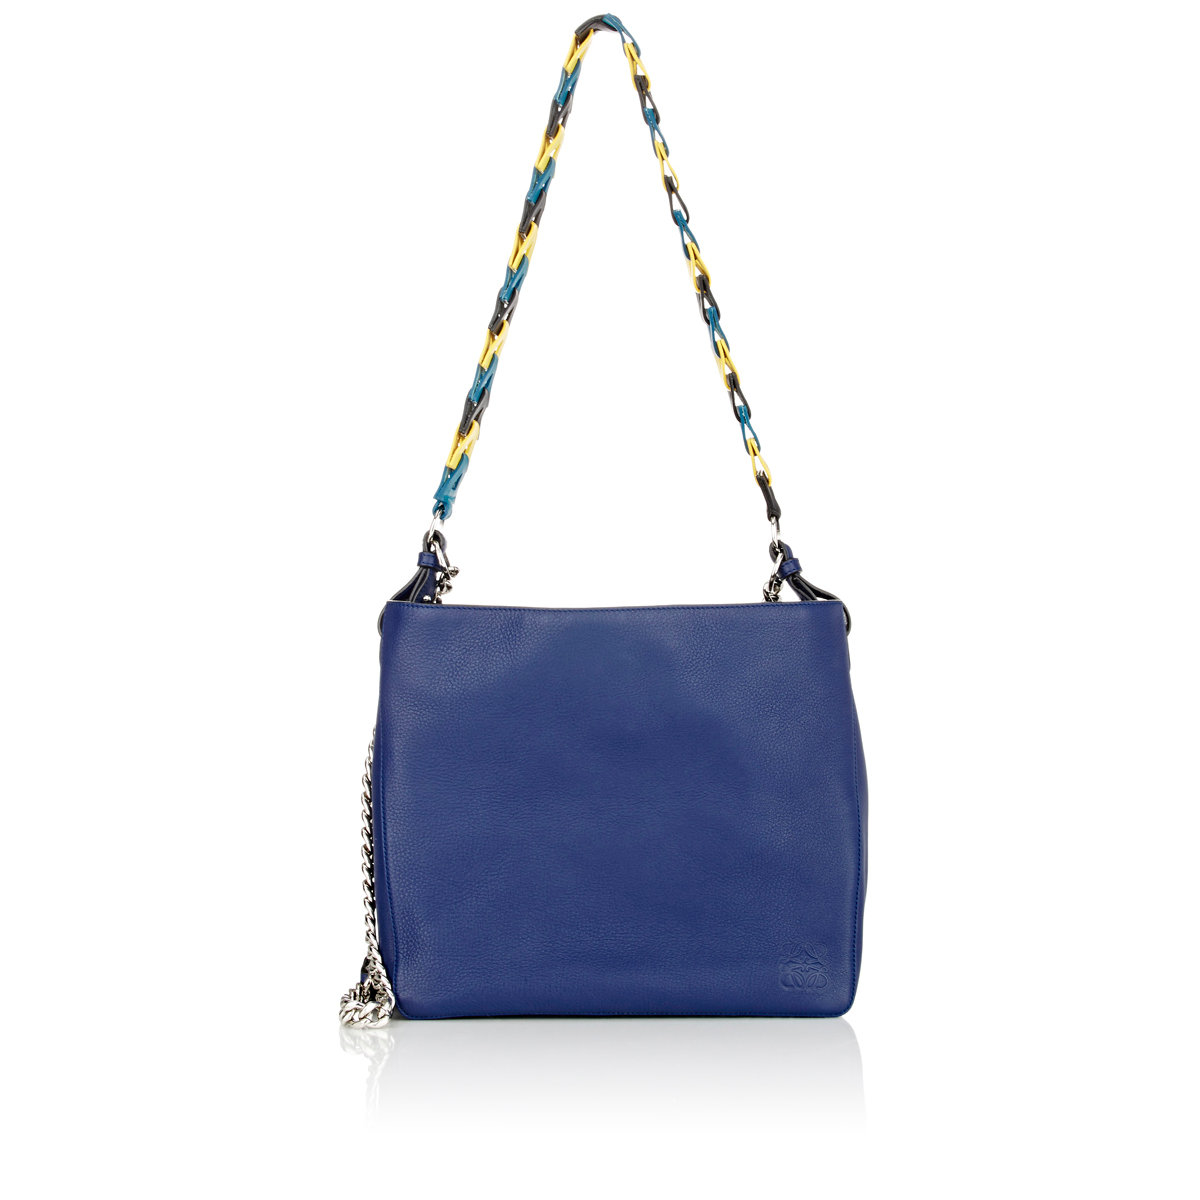 Loewe Leather V Bucket Bag in Blue - Lyst